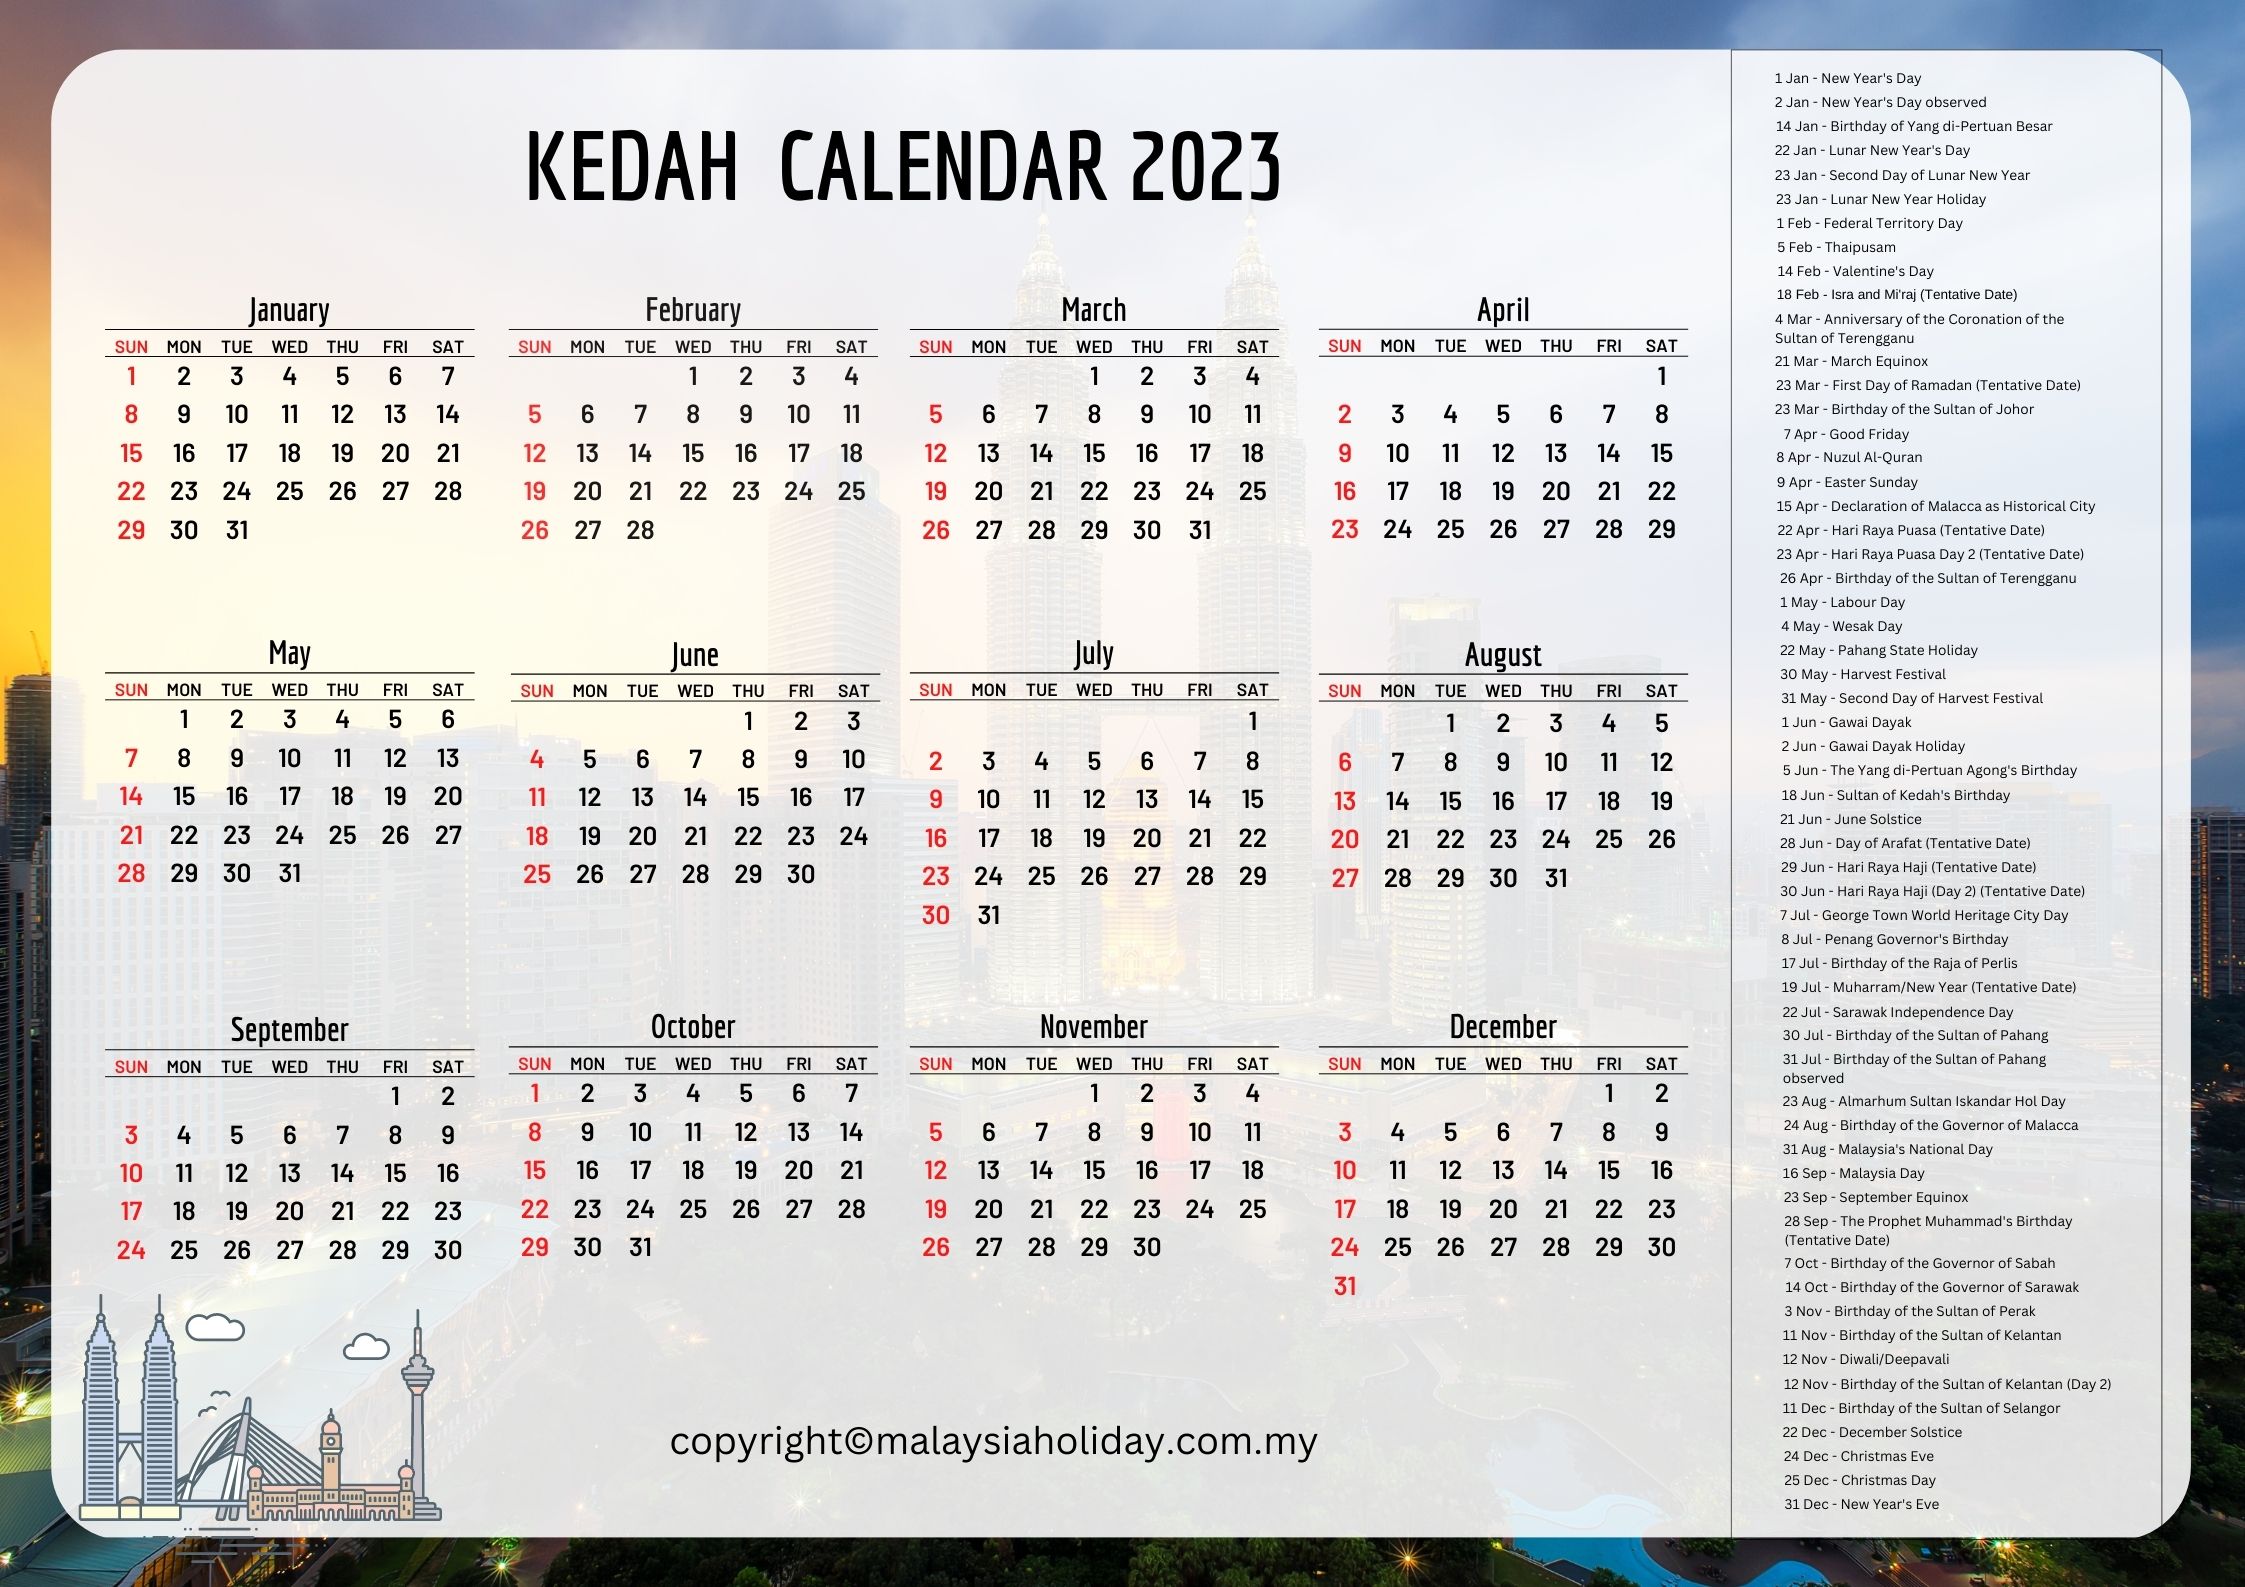 Kedah Public Holidays 2023